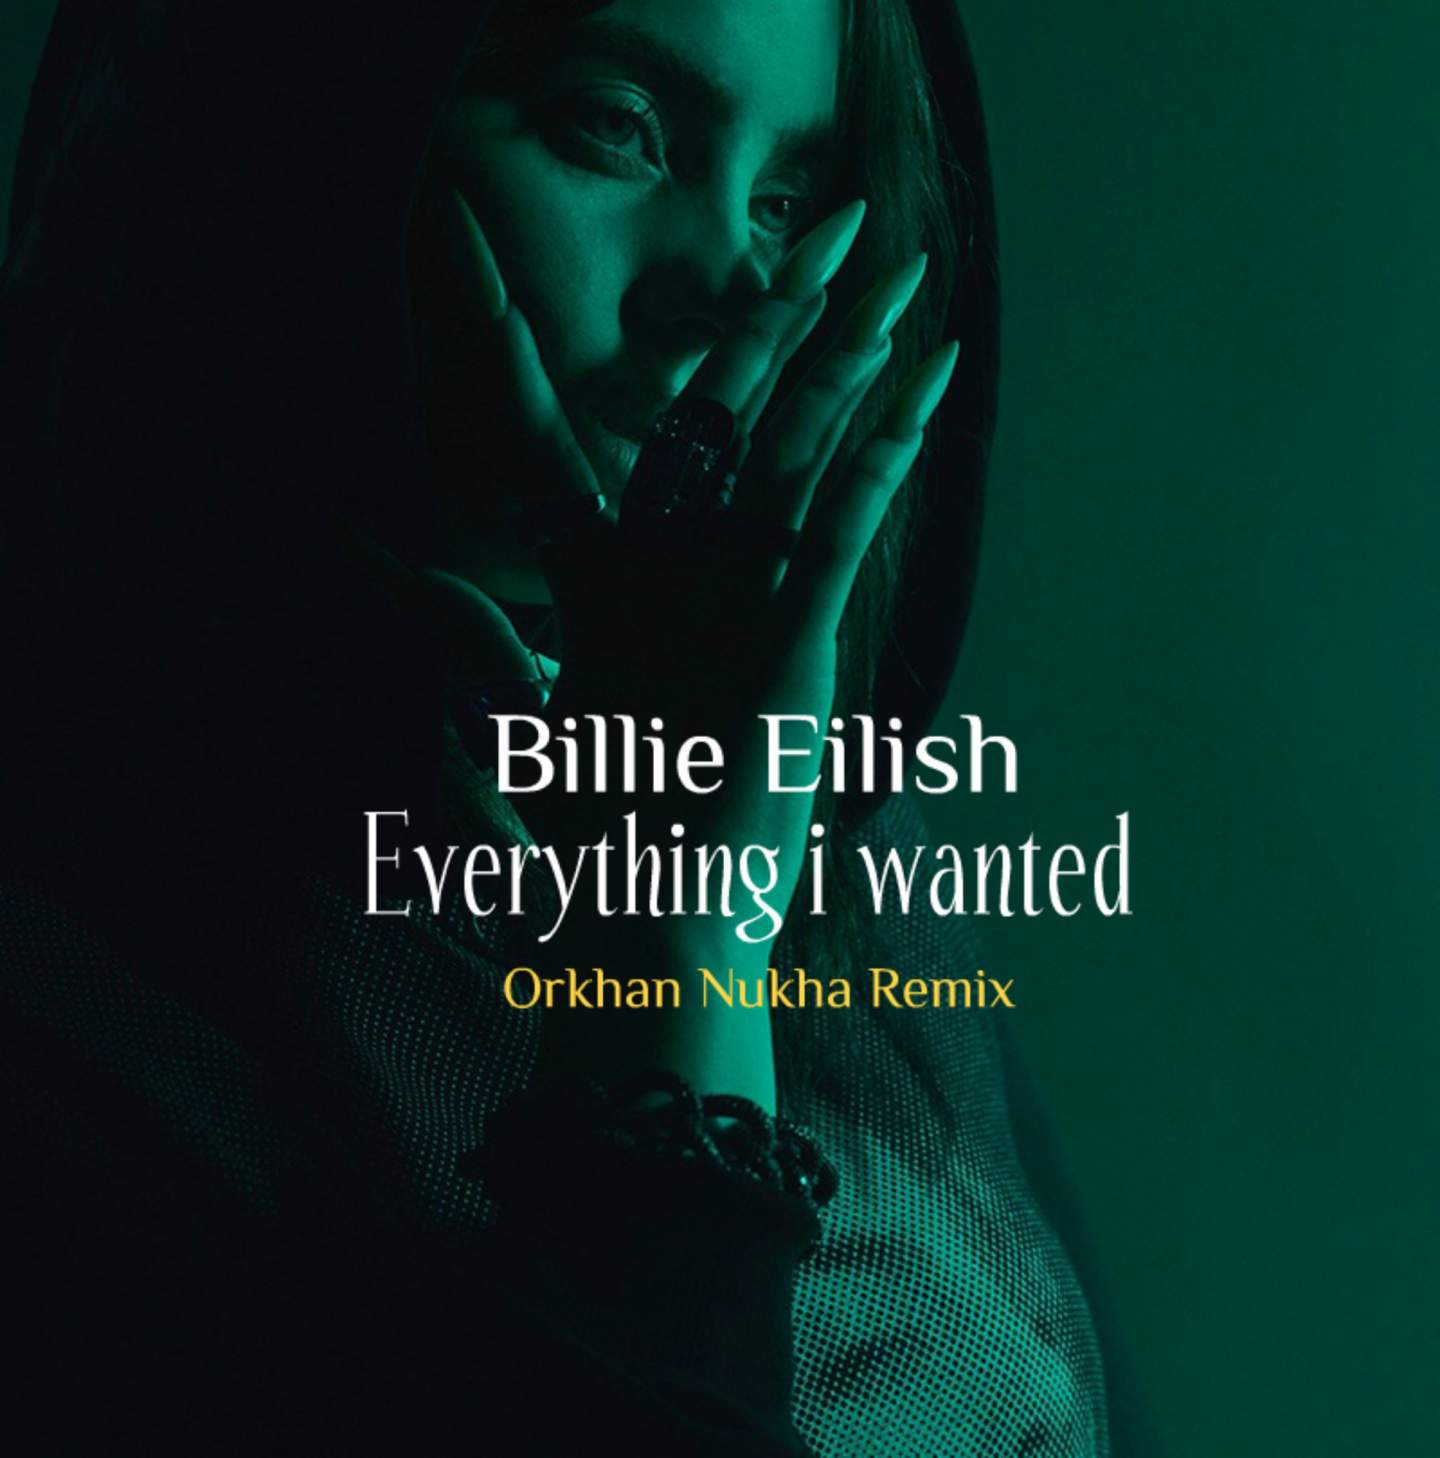 Everything i wanted feat. Billie Eilish (Orkhan Nukha Remix) -
                    Luxe radio